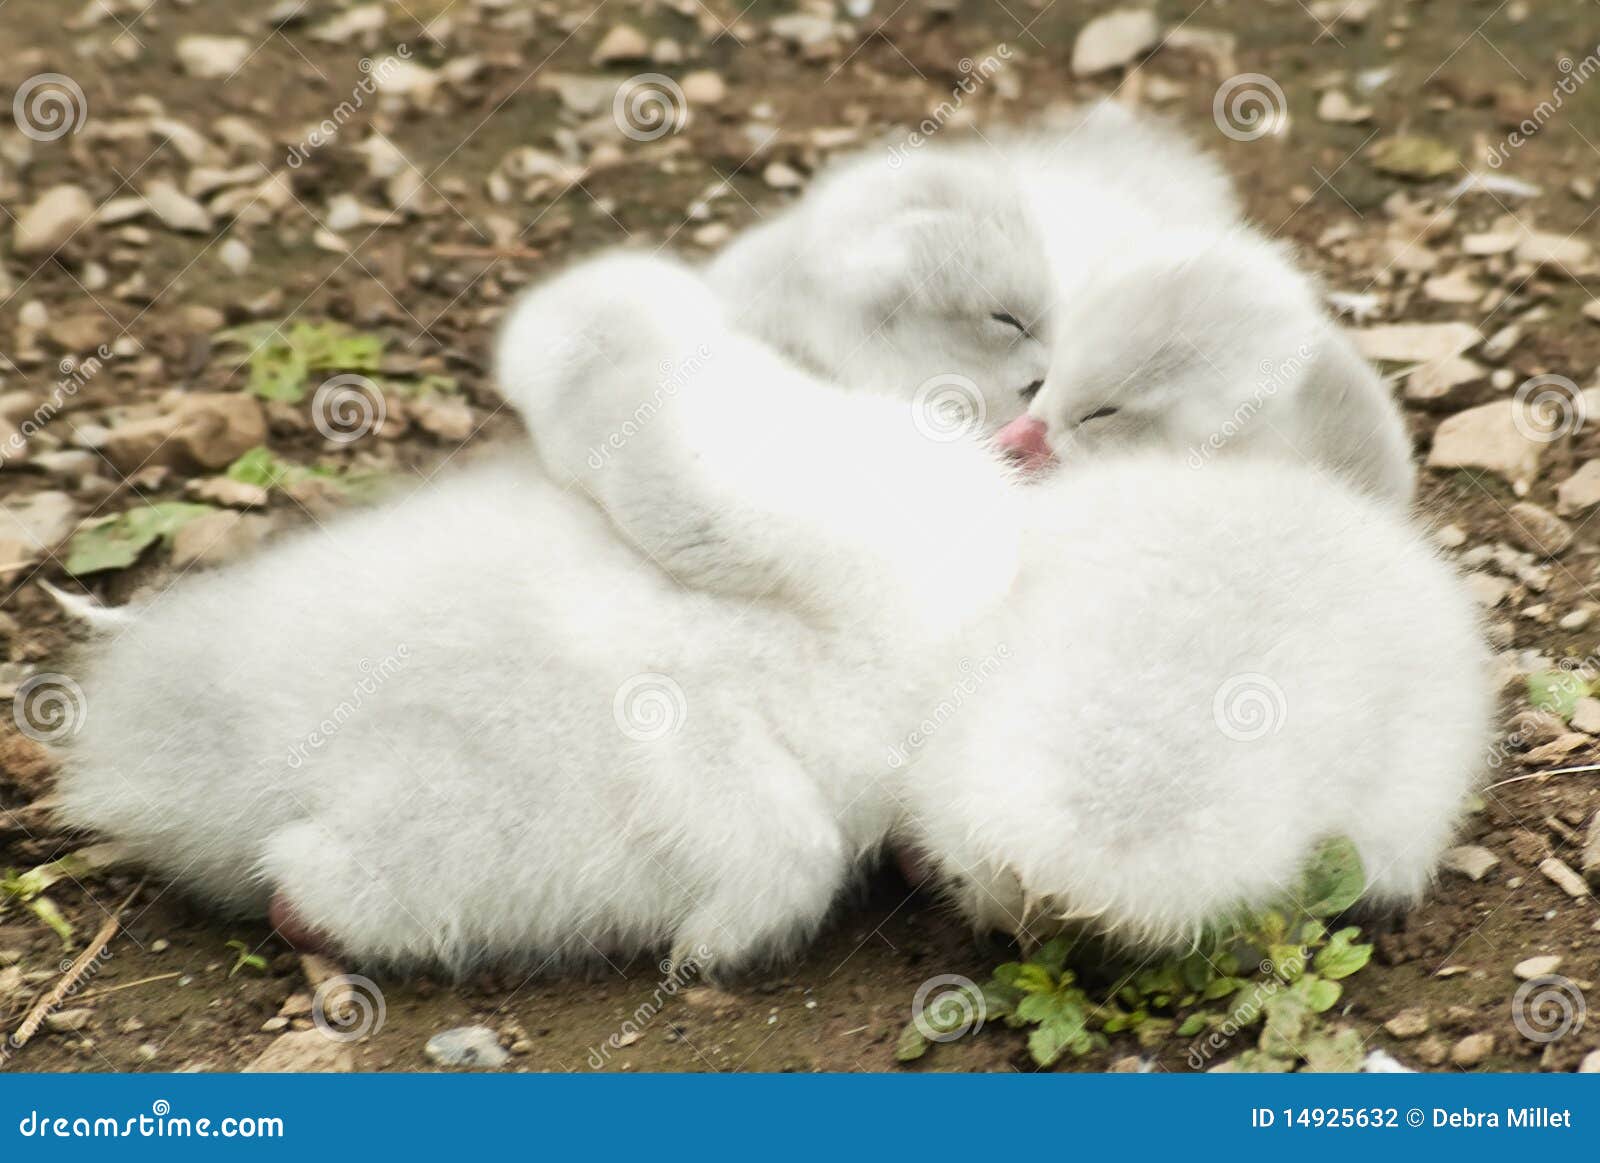 baby-swans-14925632.jpg